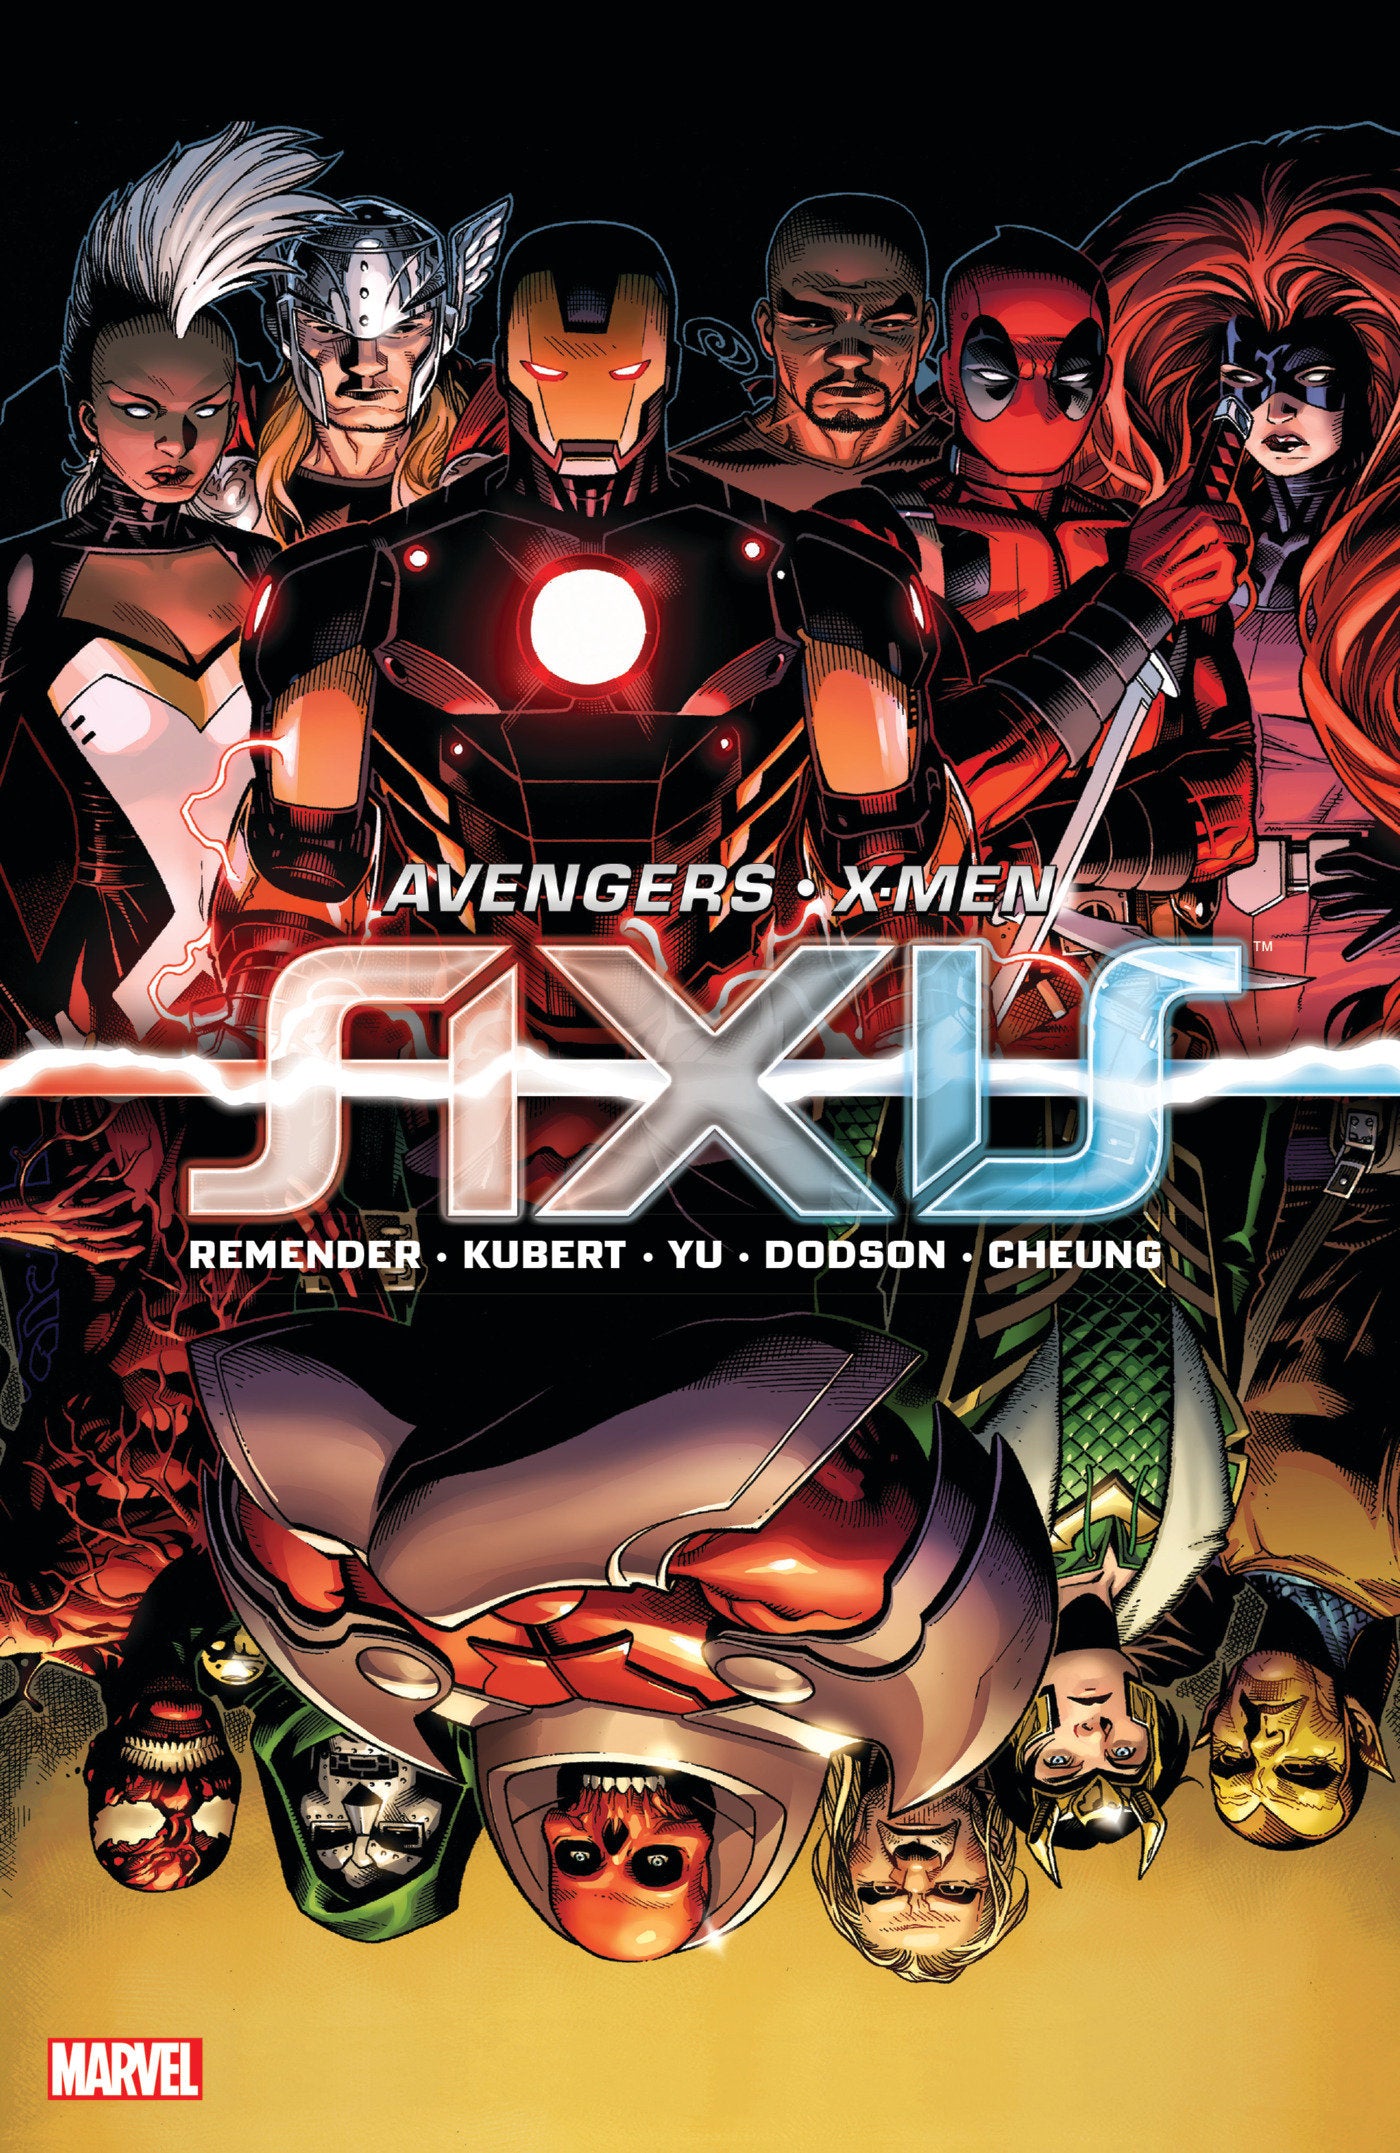 AVENGERS & X-MEN: AXIS TRADE PAPERBACK